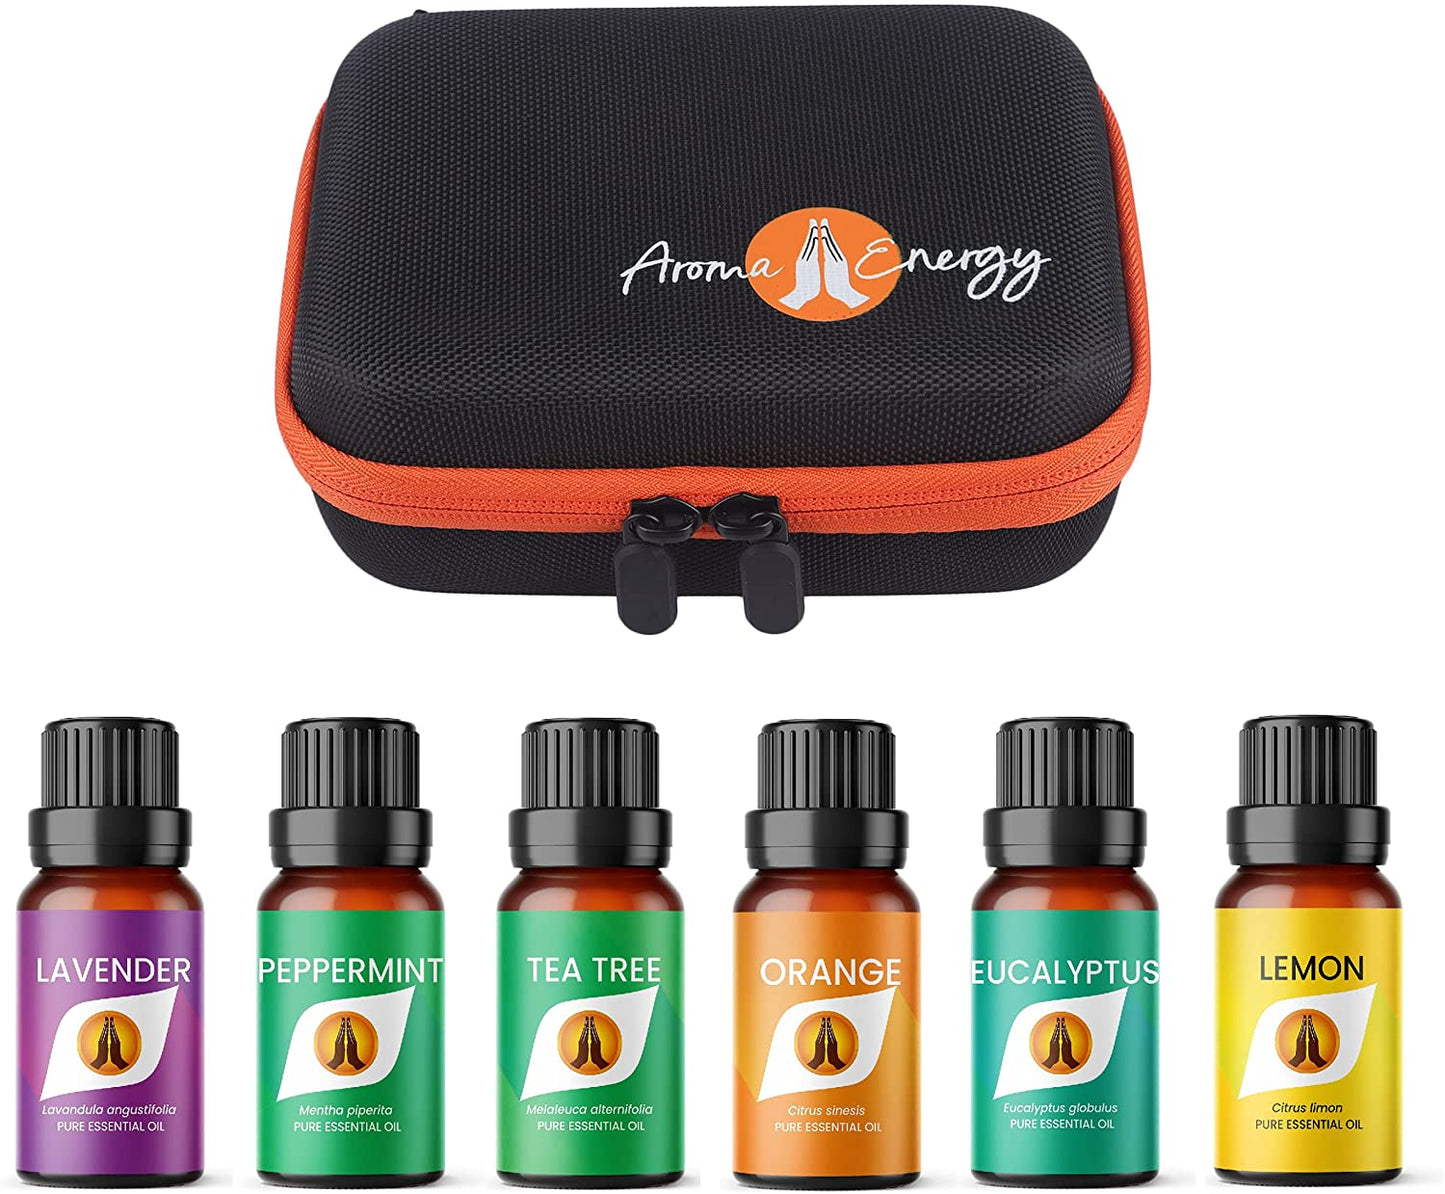 Essential Oil Gift Set Travel Case with pack of 6 x 10ml oils - Lavender, Peppermint, Tea Tree, Orange, Eucalyptus, Lemon - Aroma Energy